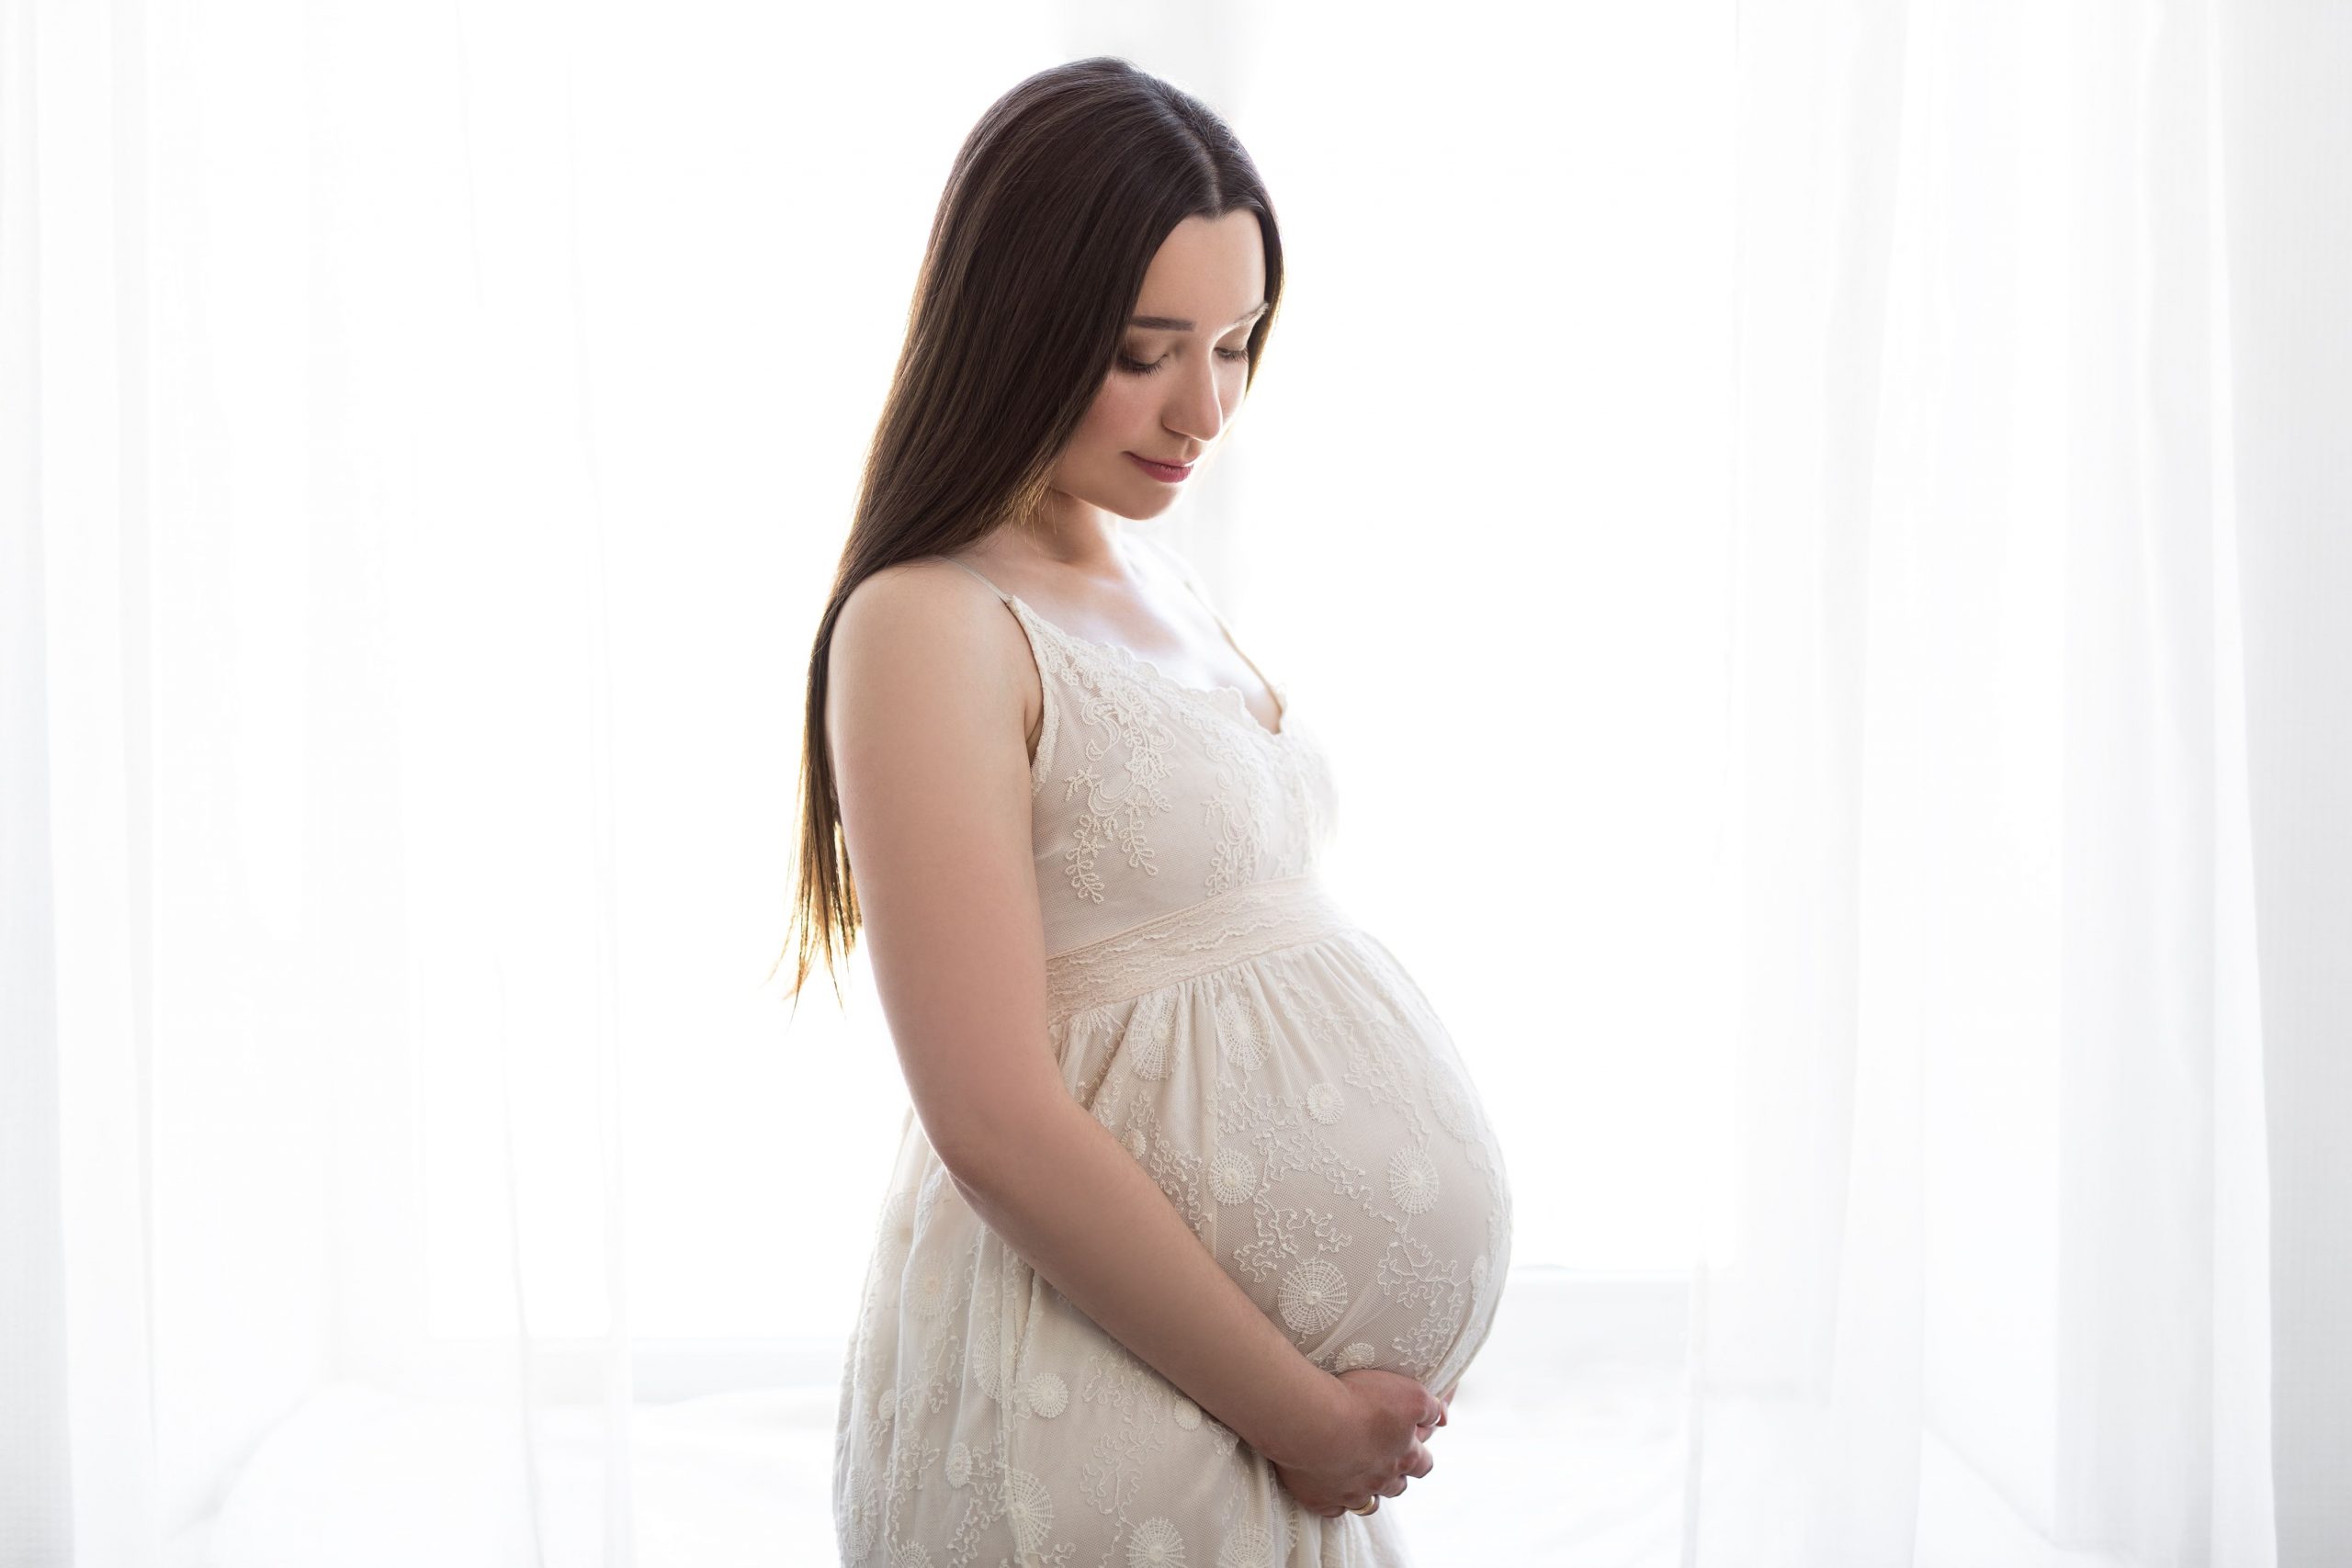 Grávida, feliz e linda – saiba o que pode usar na gravidez